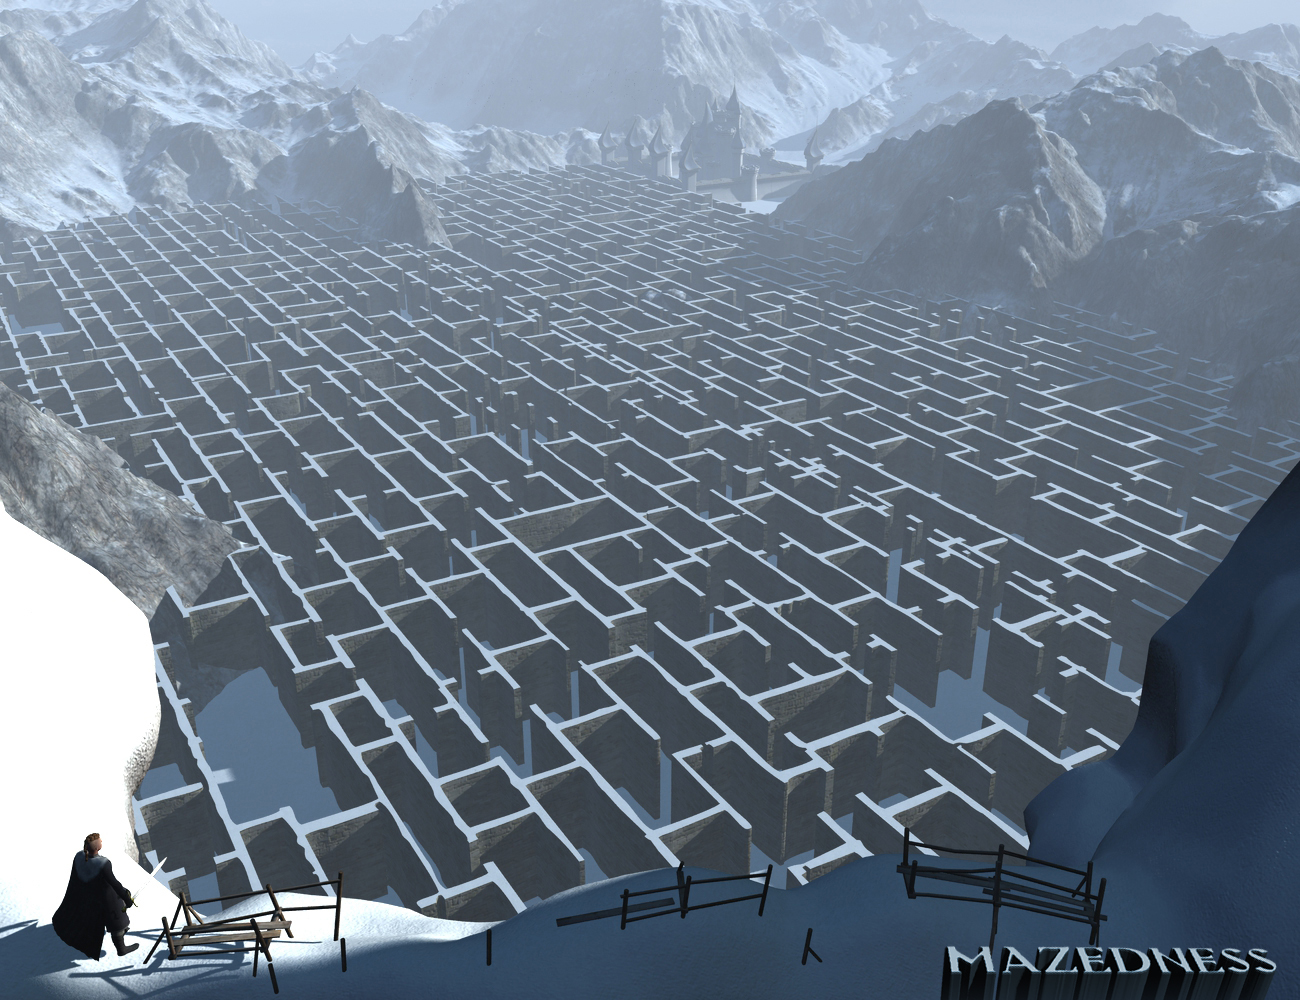 Mazedness for DAZ Studio by: Marshian, 3D Models by Daz 3D